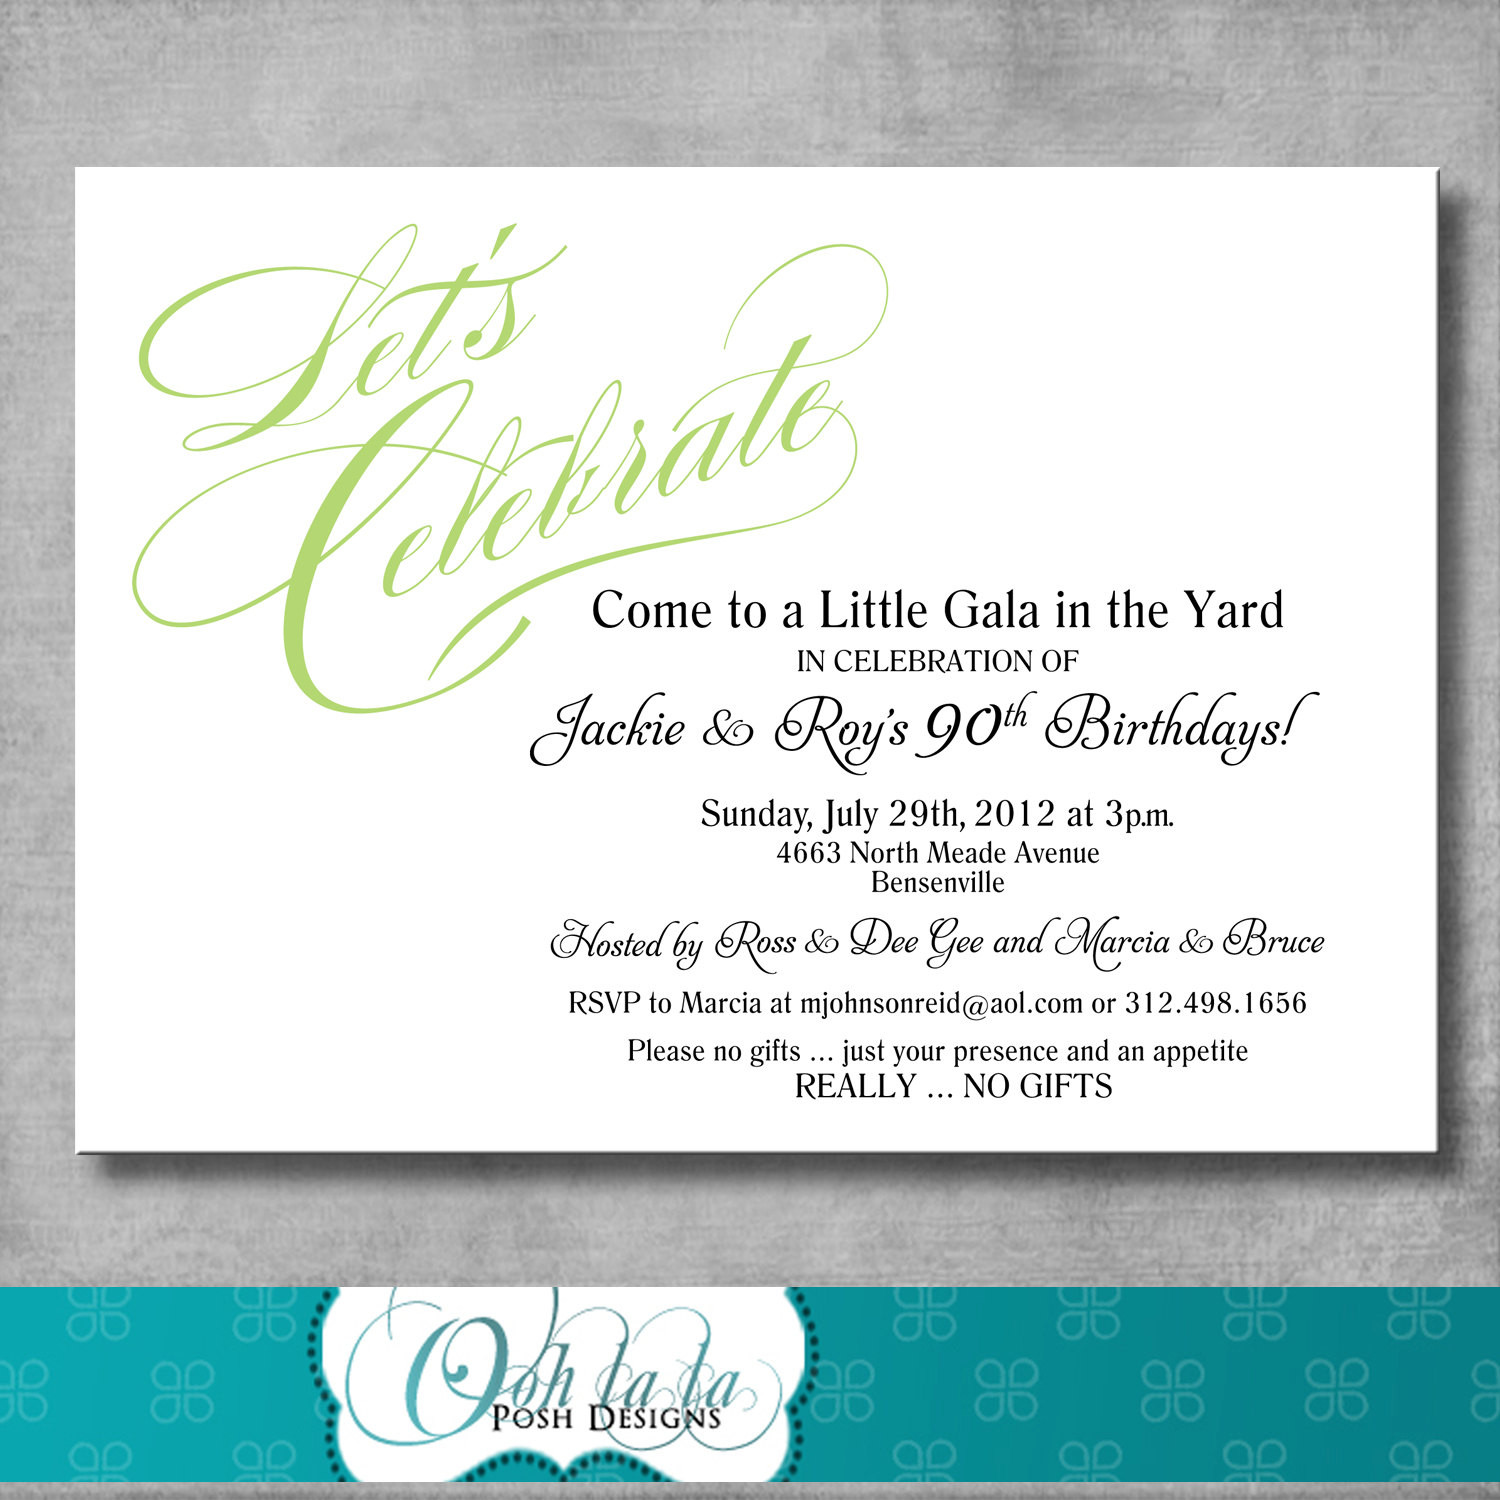 Adult Birthday Party Invitations
 Printable Adult Birthday Party Invitation by